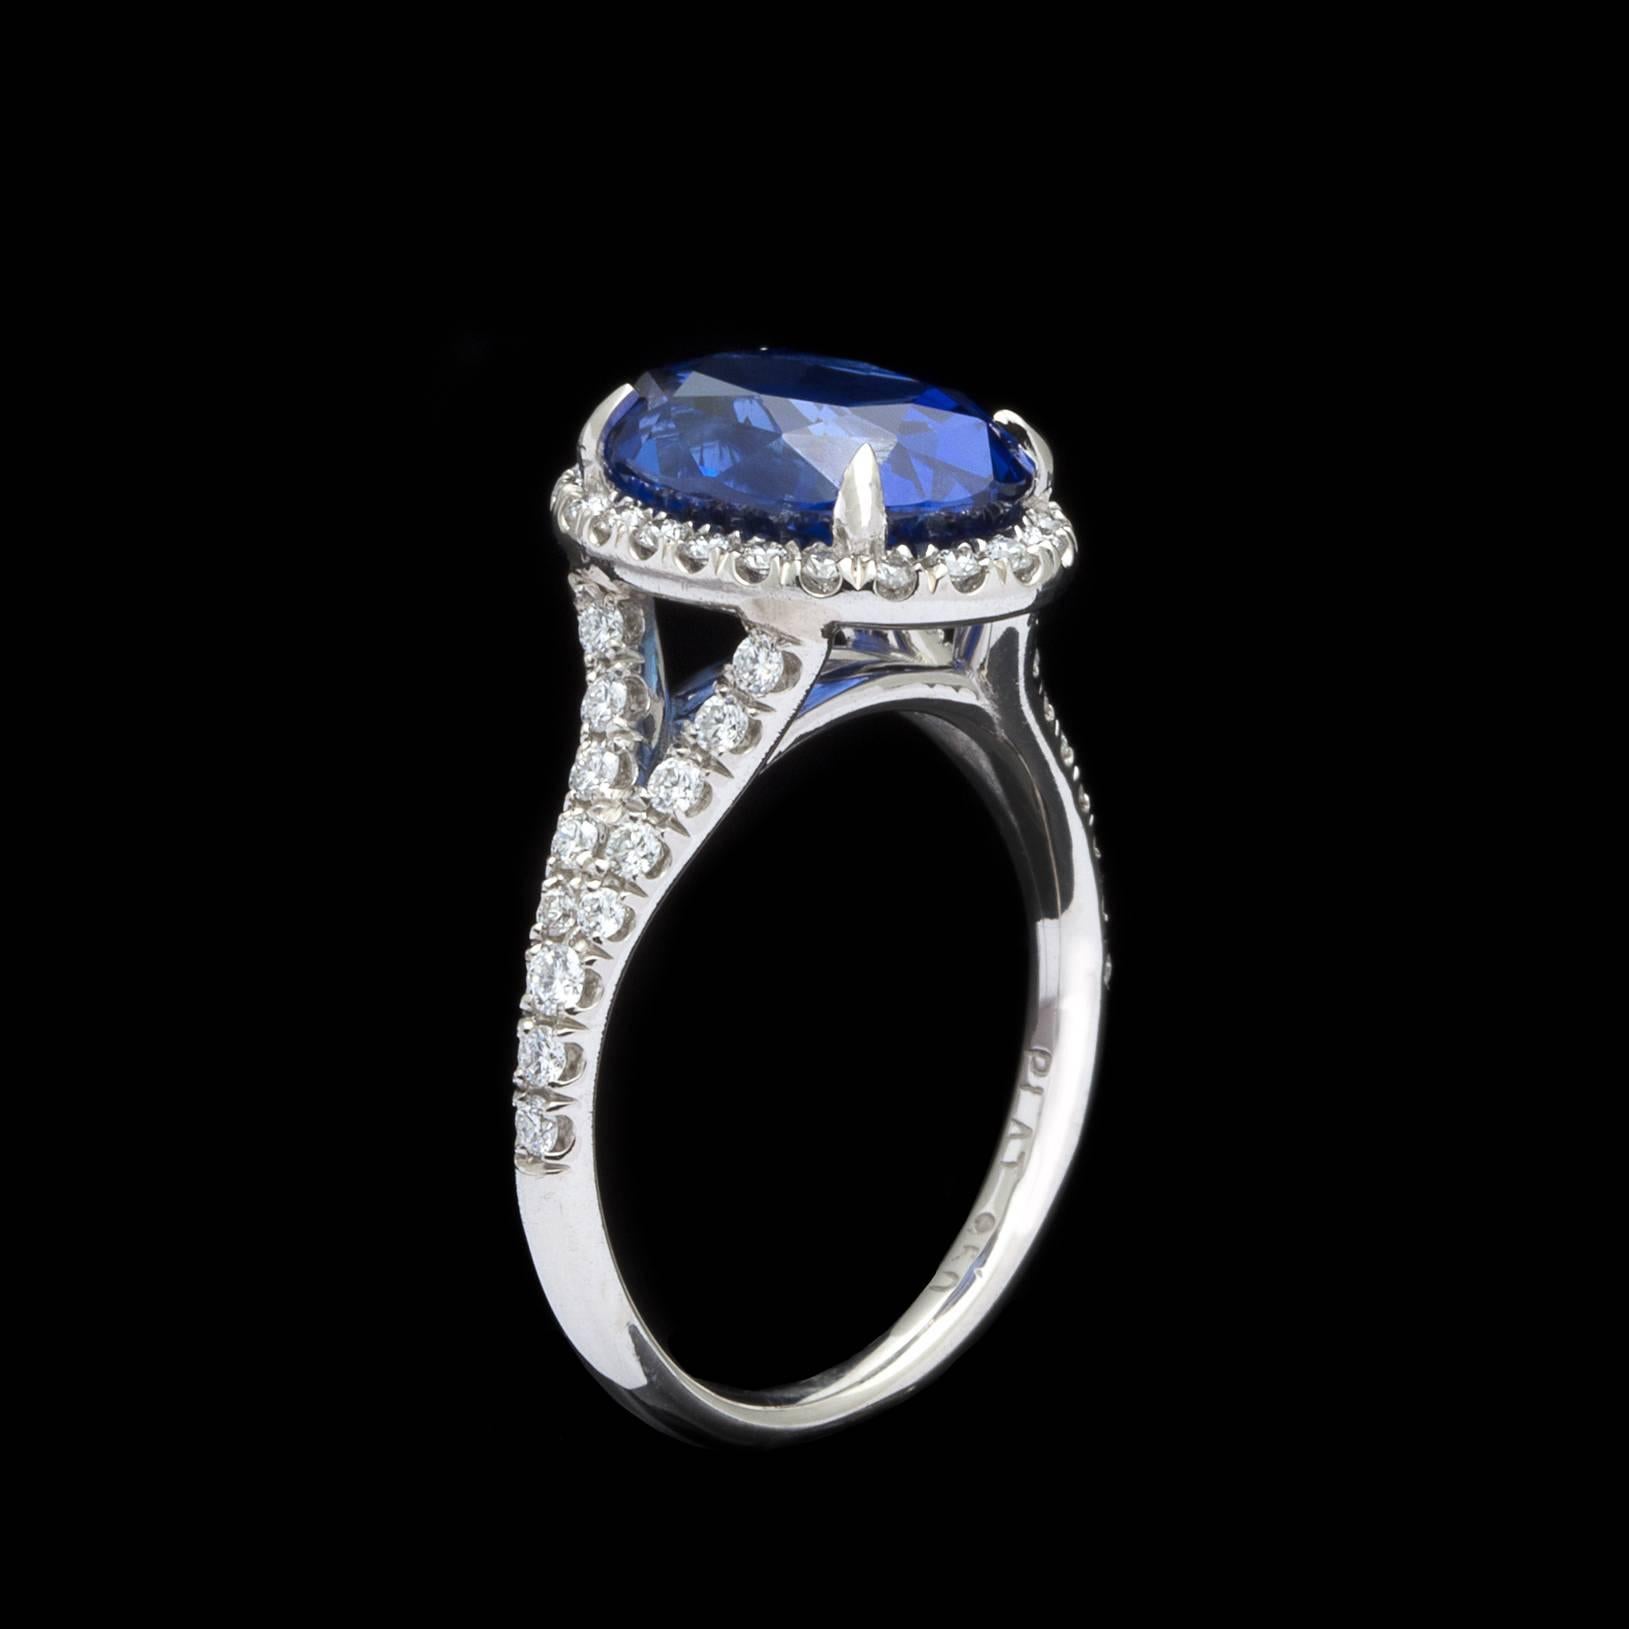 Oval Cut Unheated 5.08 Carat Blue Sapphire in Custom Platinum and Diamond Ring